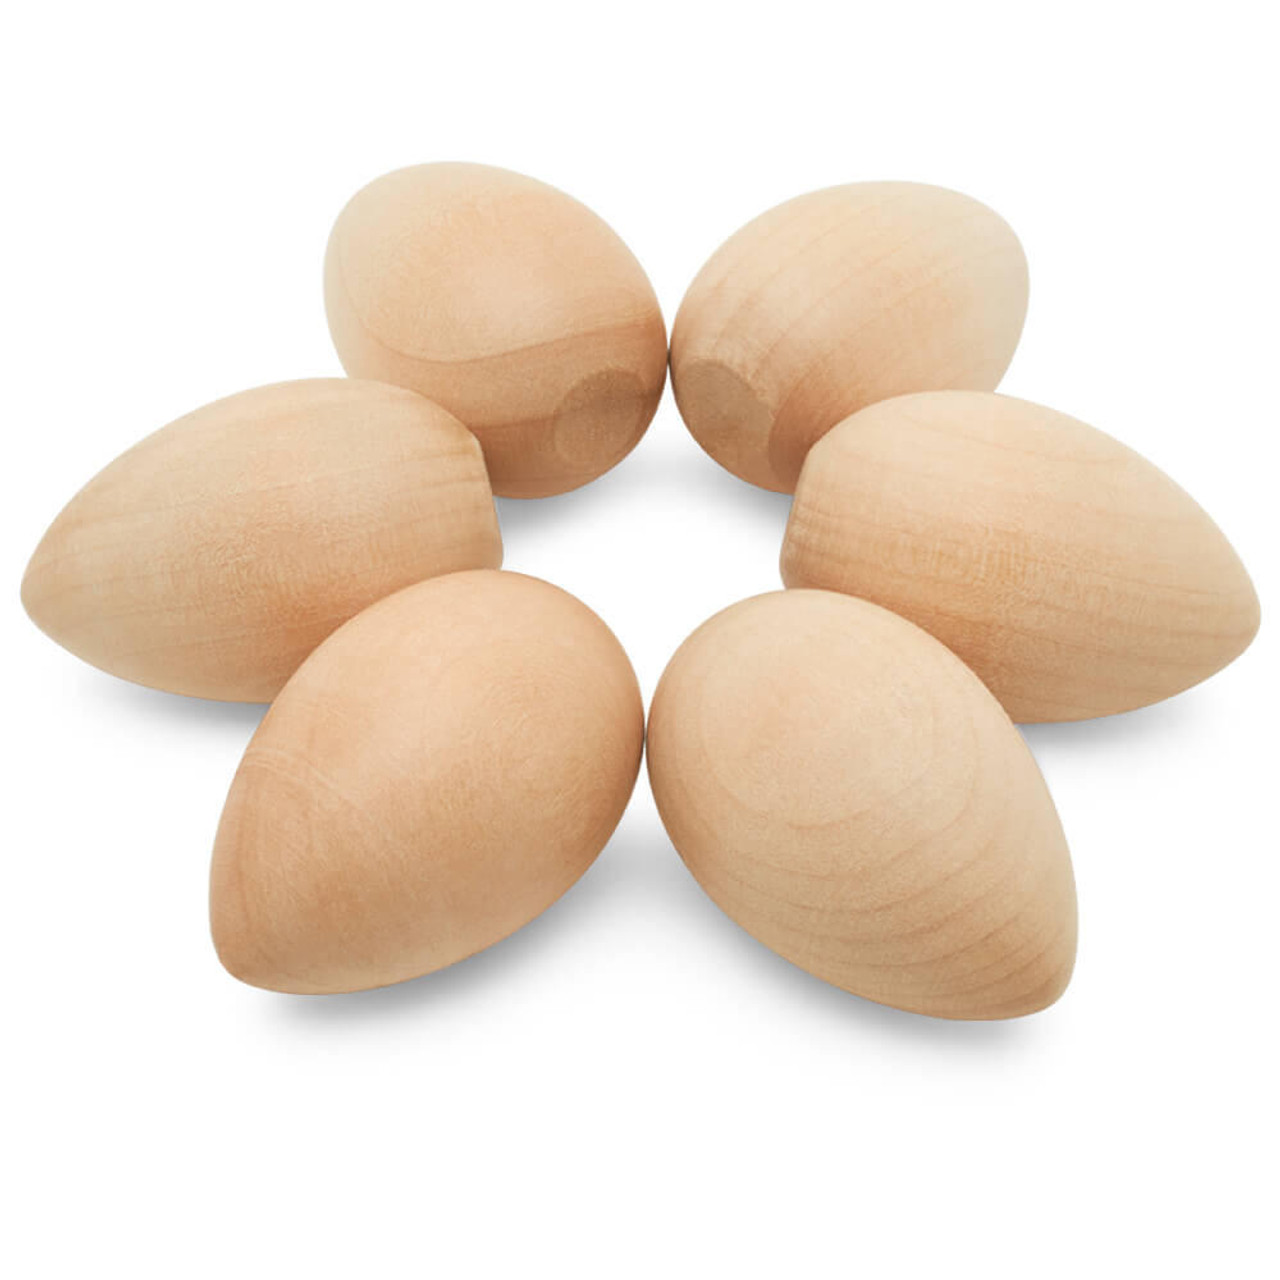 Wood Egg Shape Finial. 2sz. 5 1/4 x 2 3/4 or 6 3